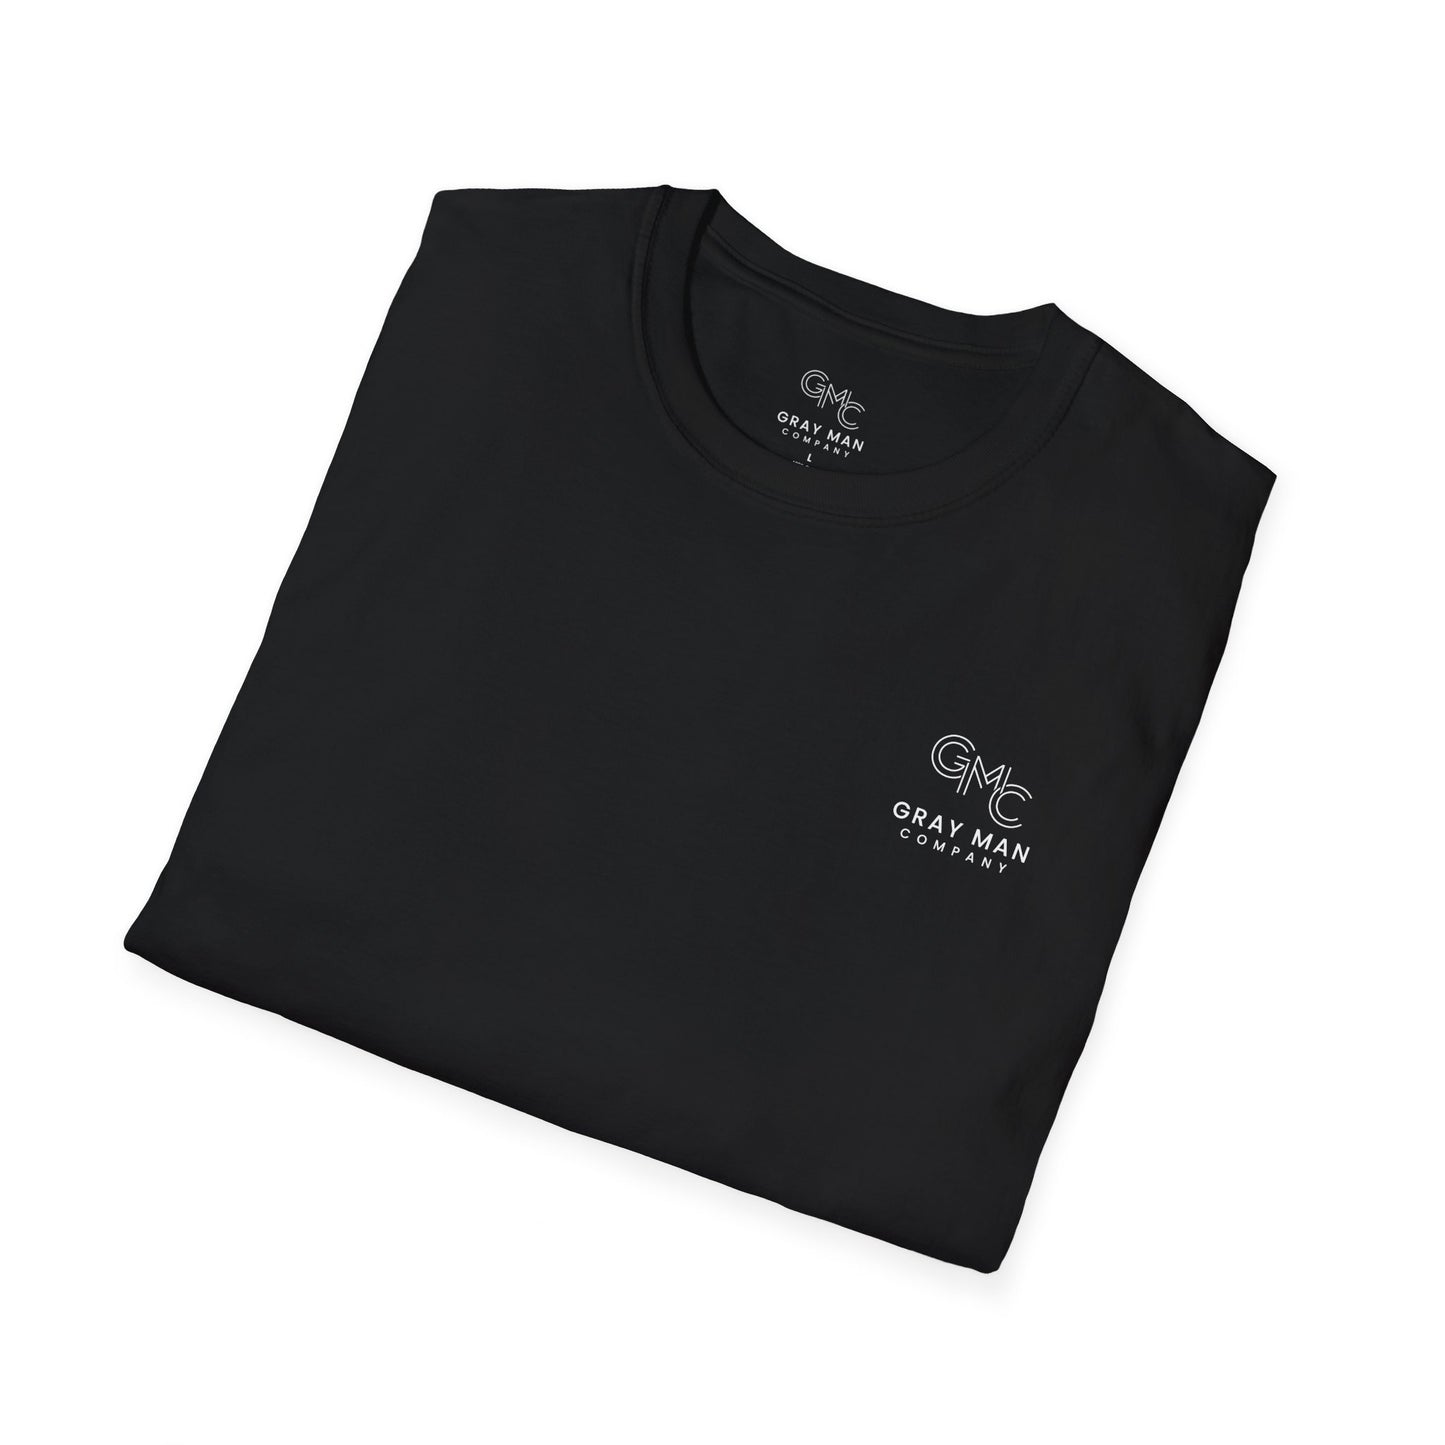 Women’s EDC Graphic T-Shirt - F-BOMB